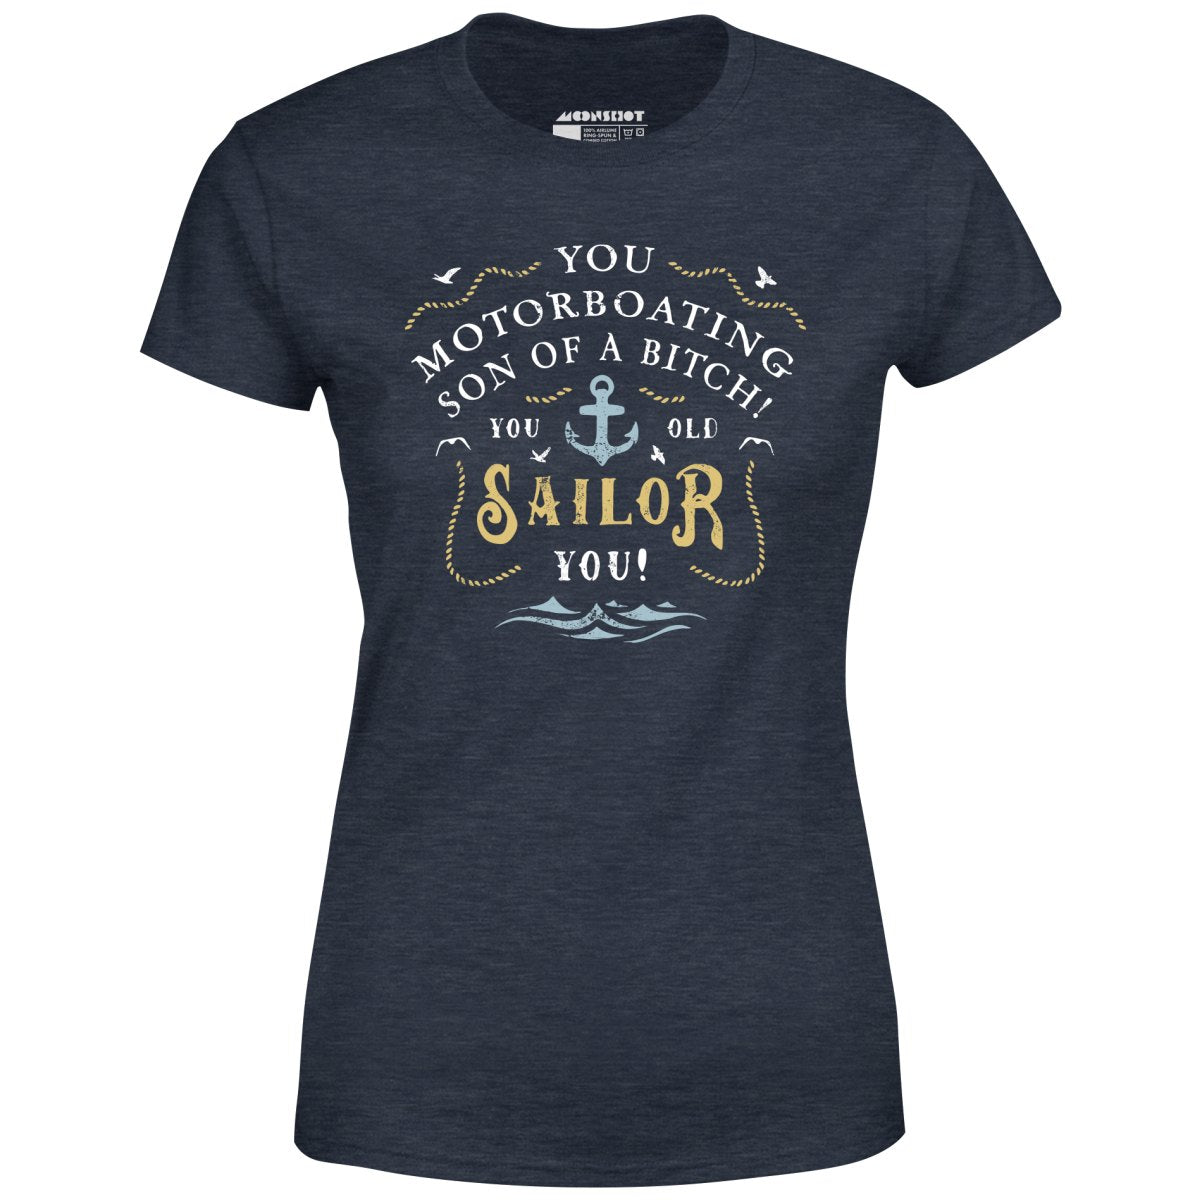 You Old Sailor You - Women's T-Shirt